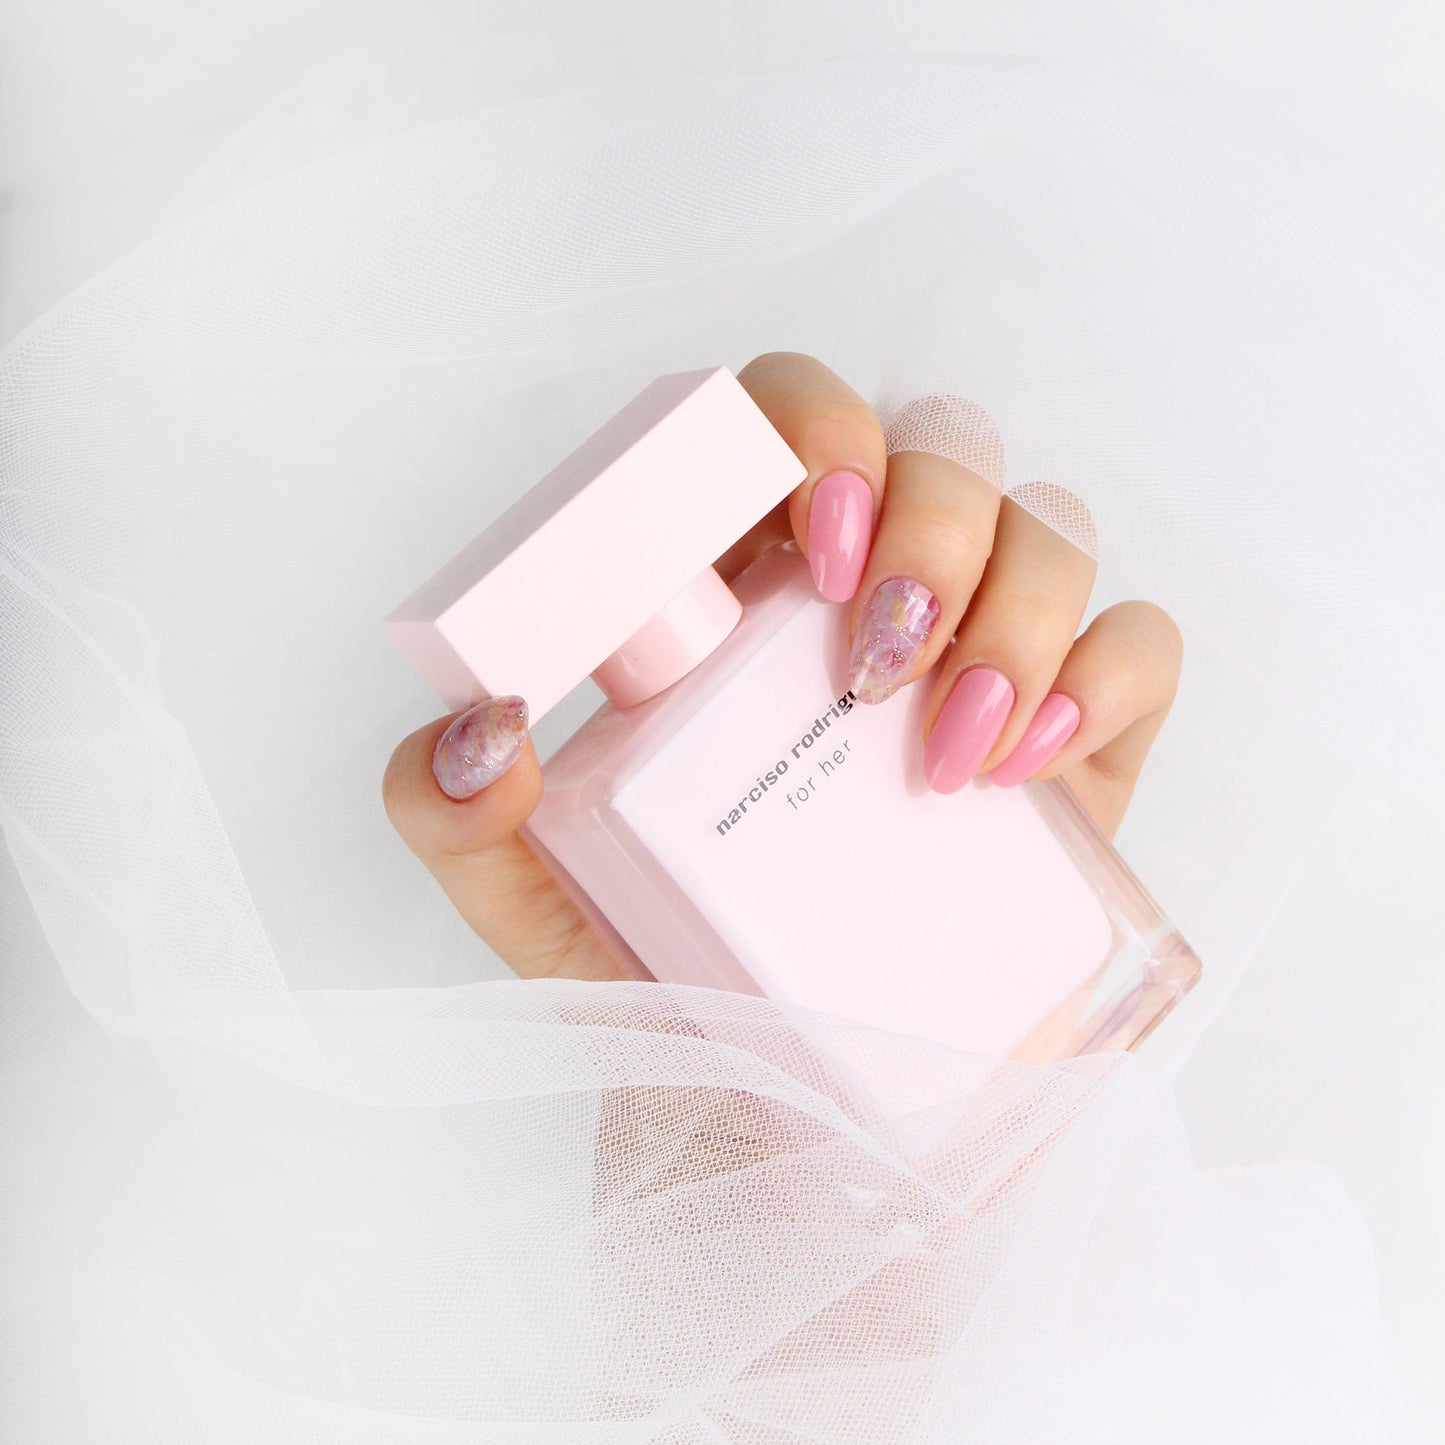 Rosa Gelnageltrend nagellack